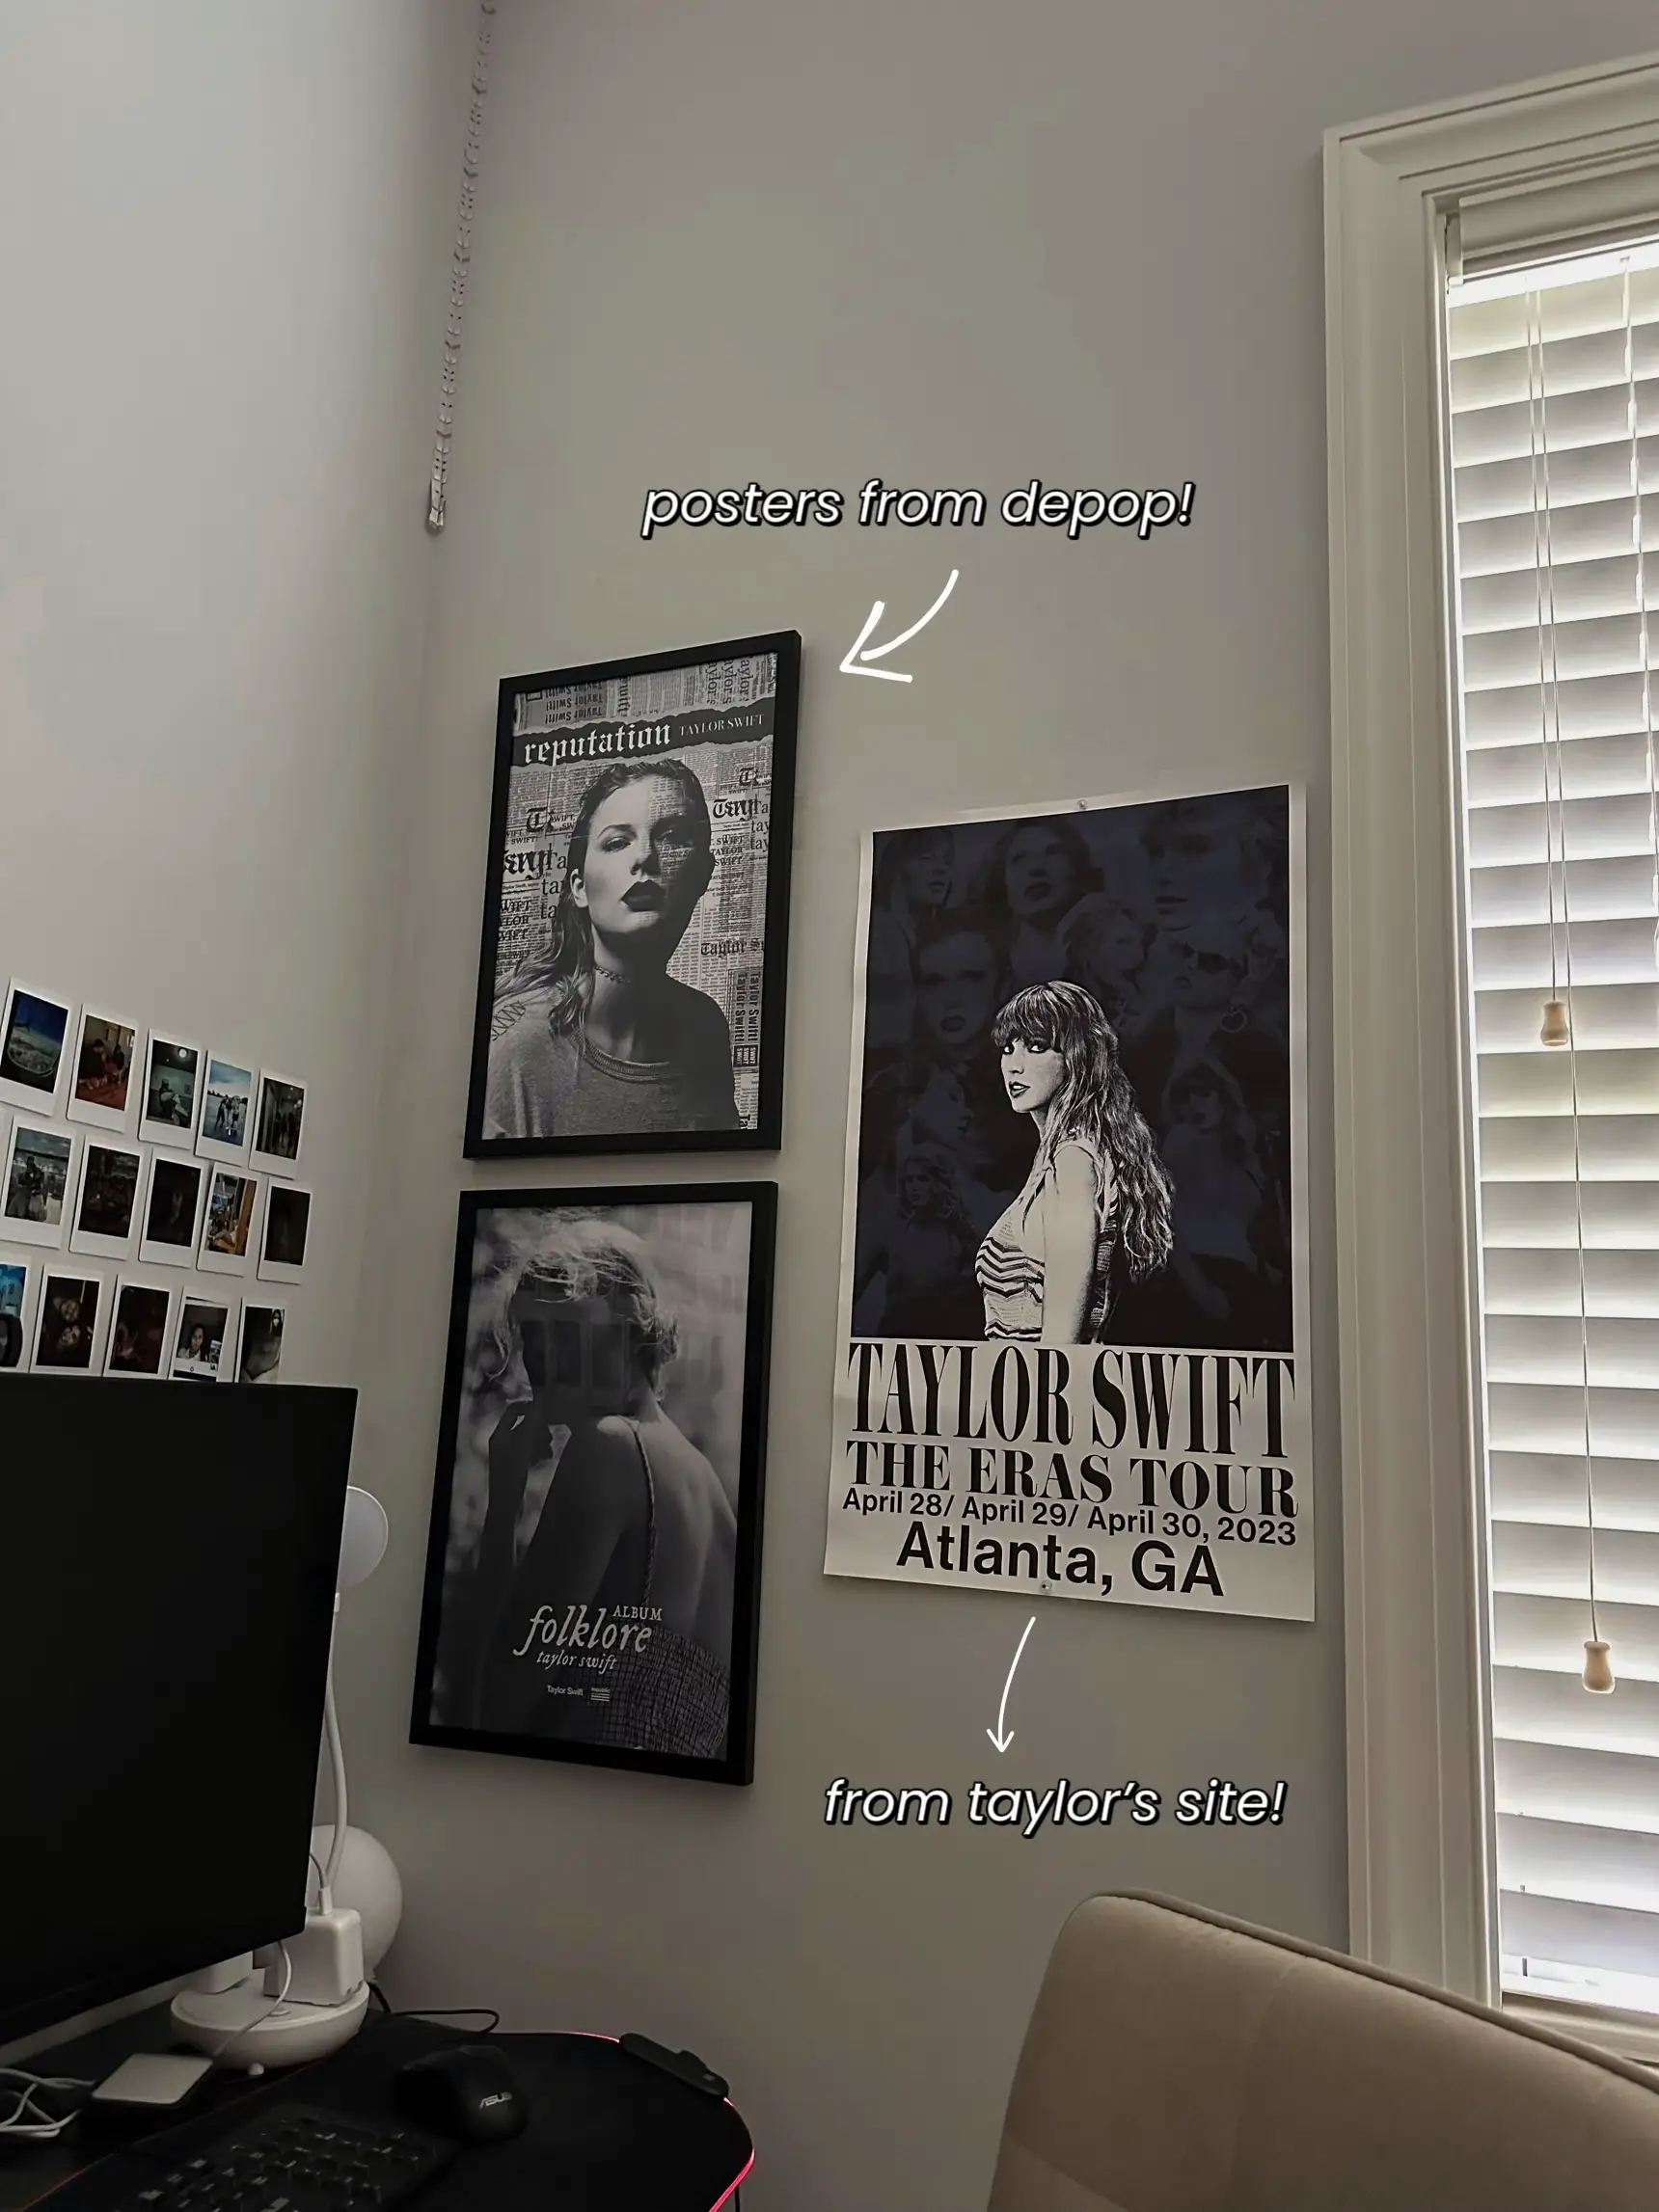 Taylor Swift bedroom decor - Lemon8 Search